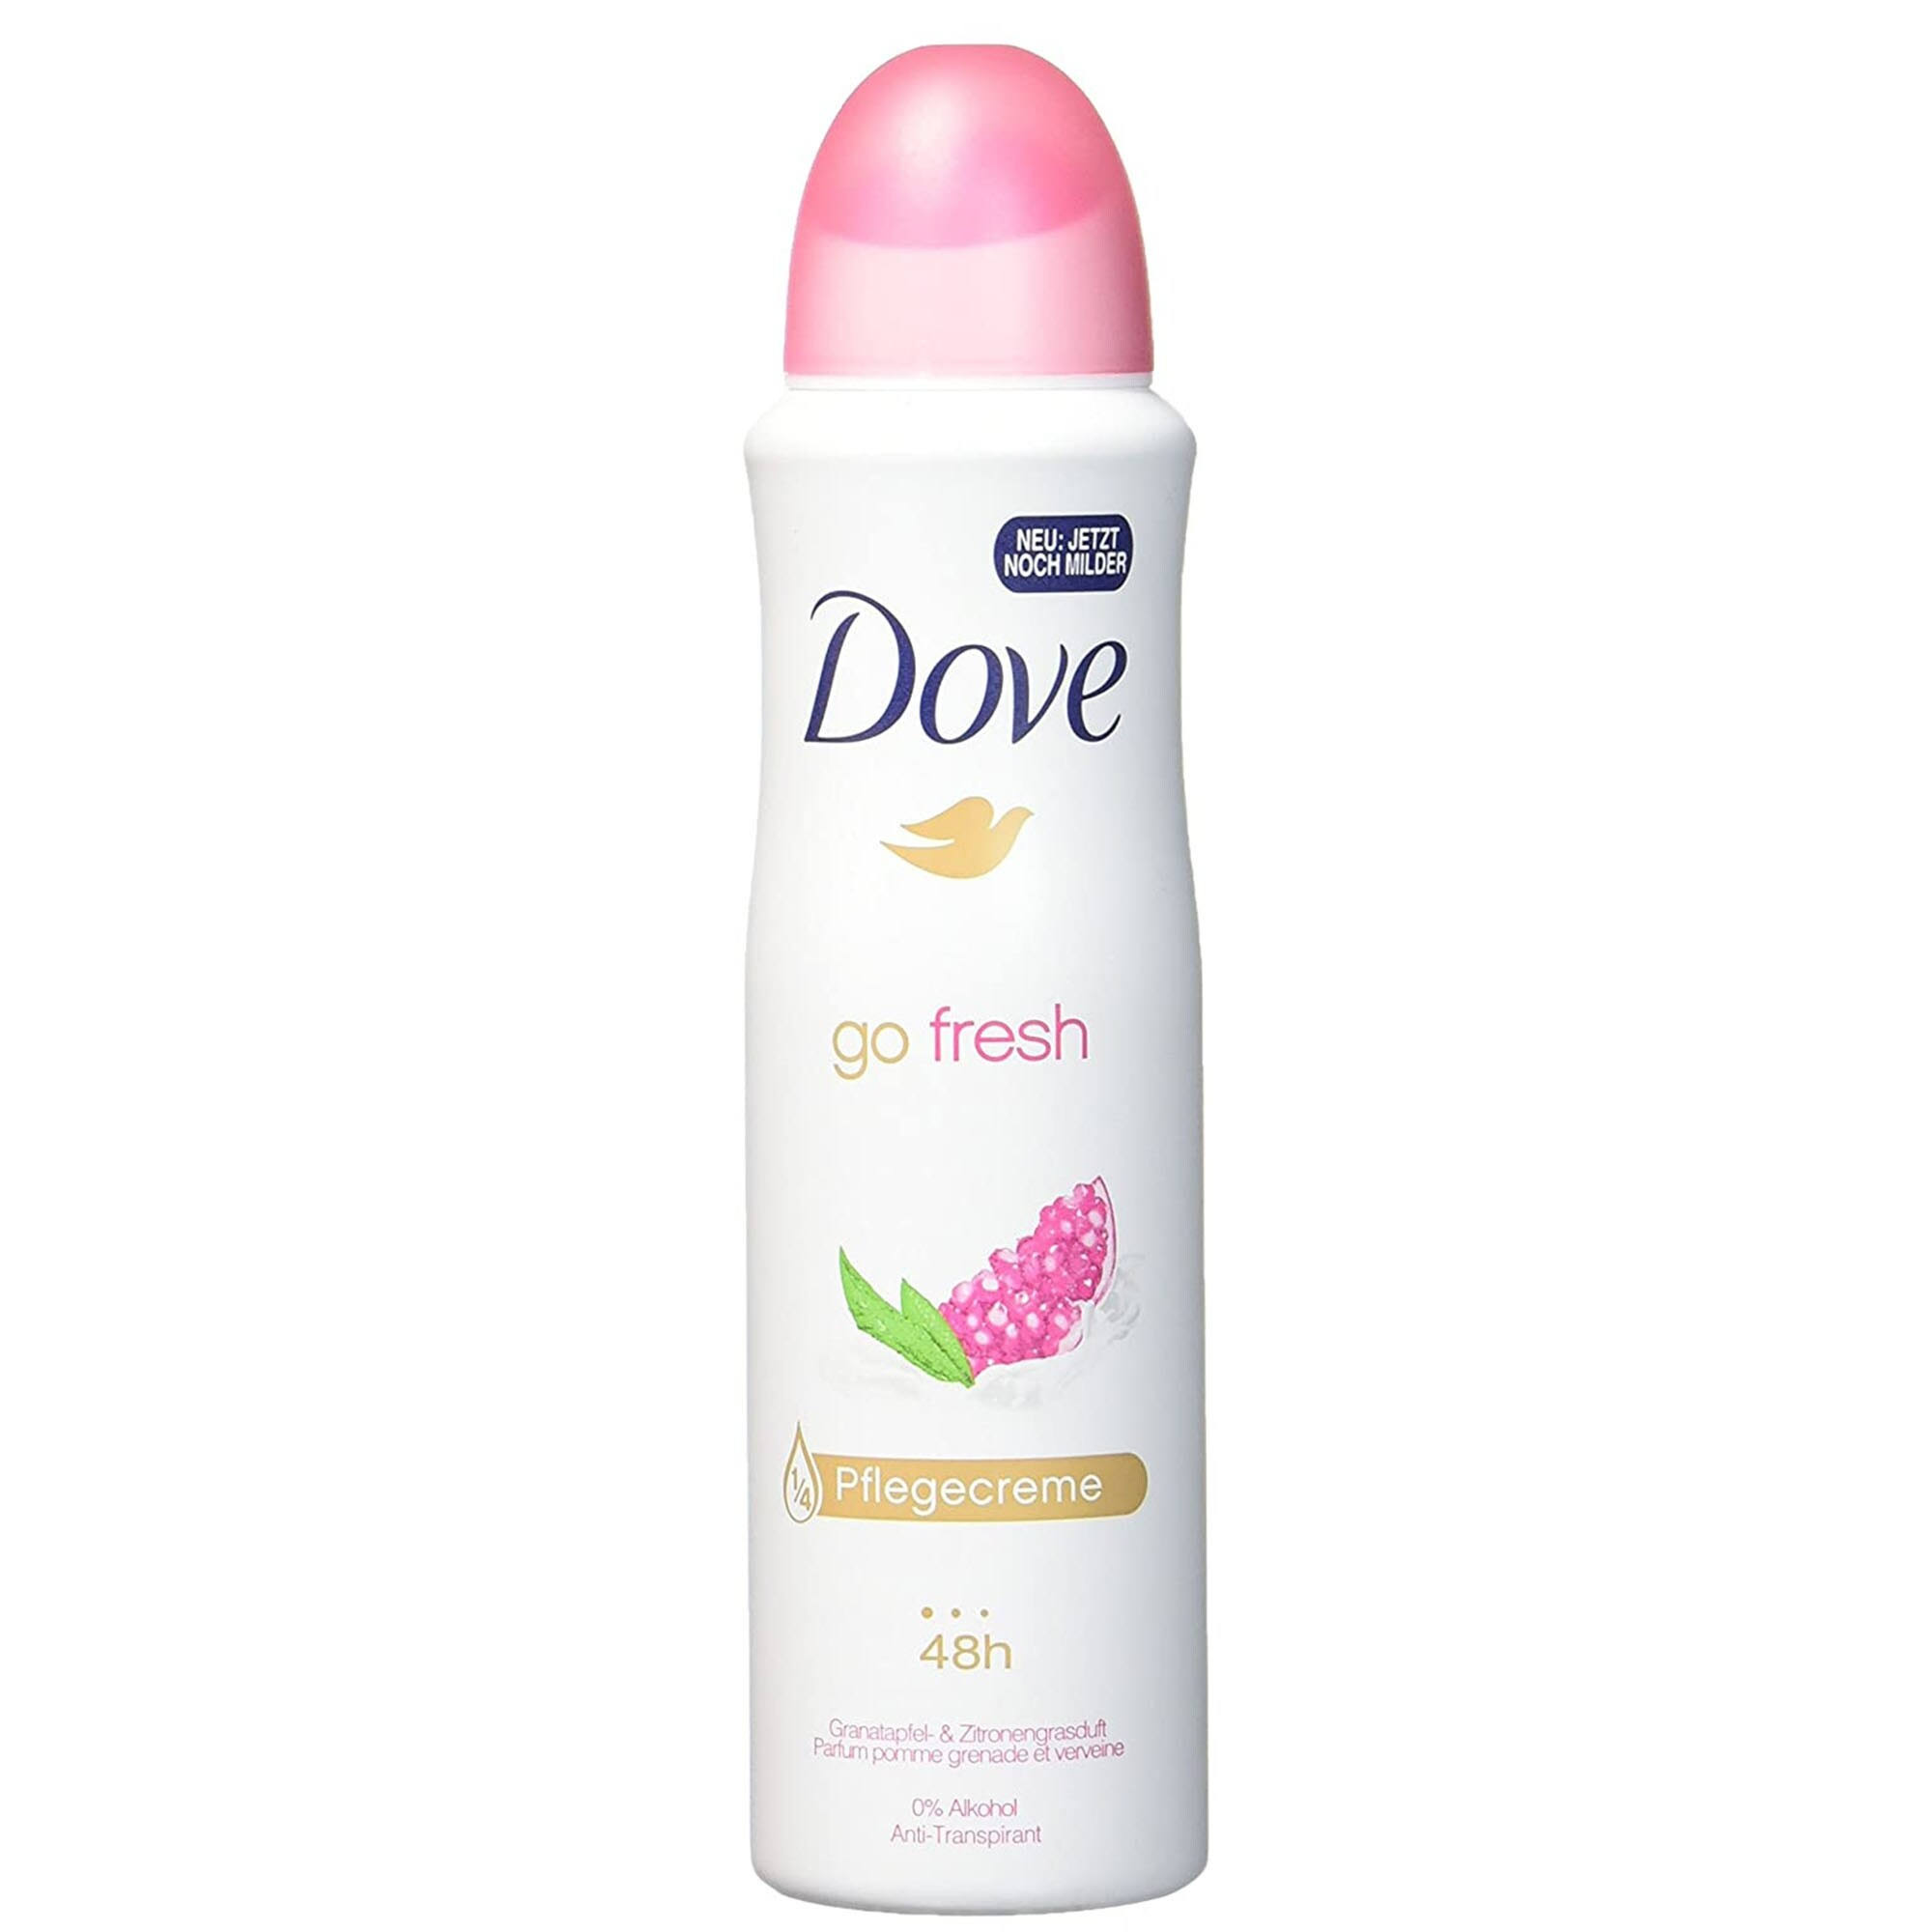 Dove Anti-perspirant Deodorant Aerosol - Pomegranate, 150ml